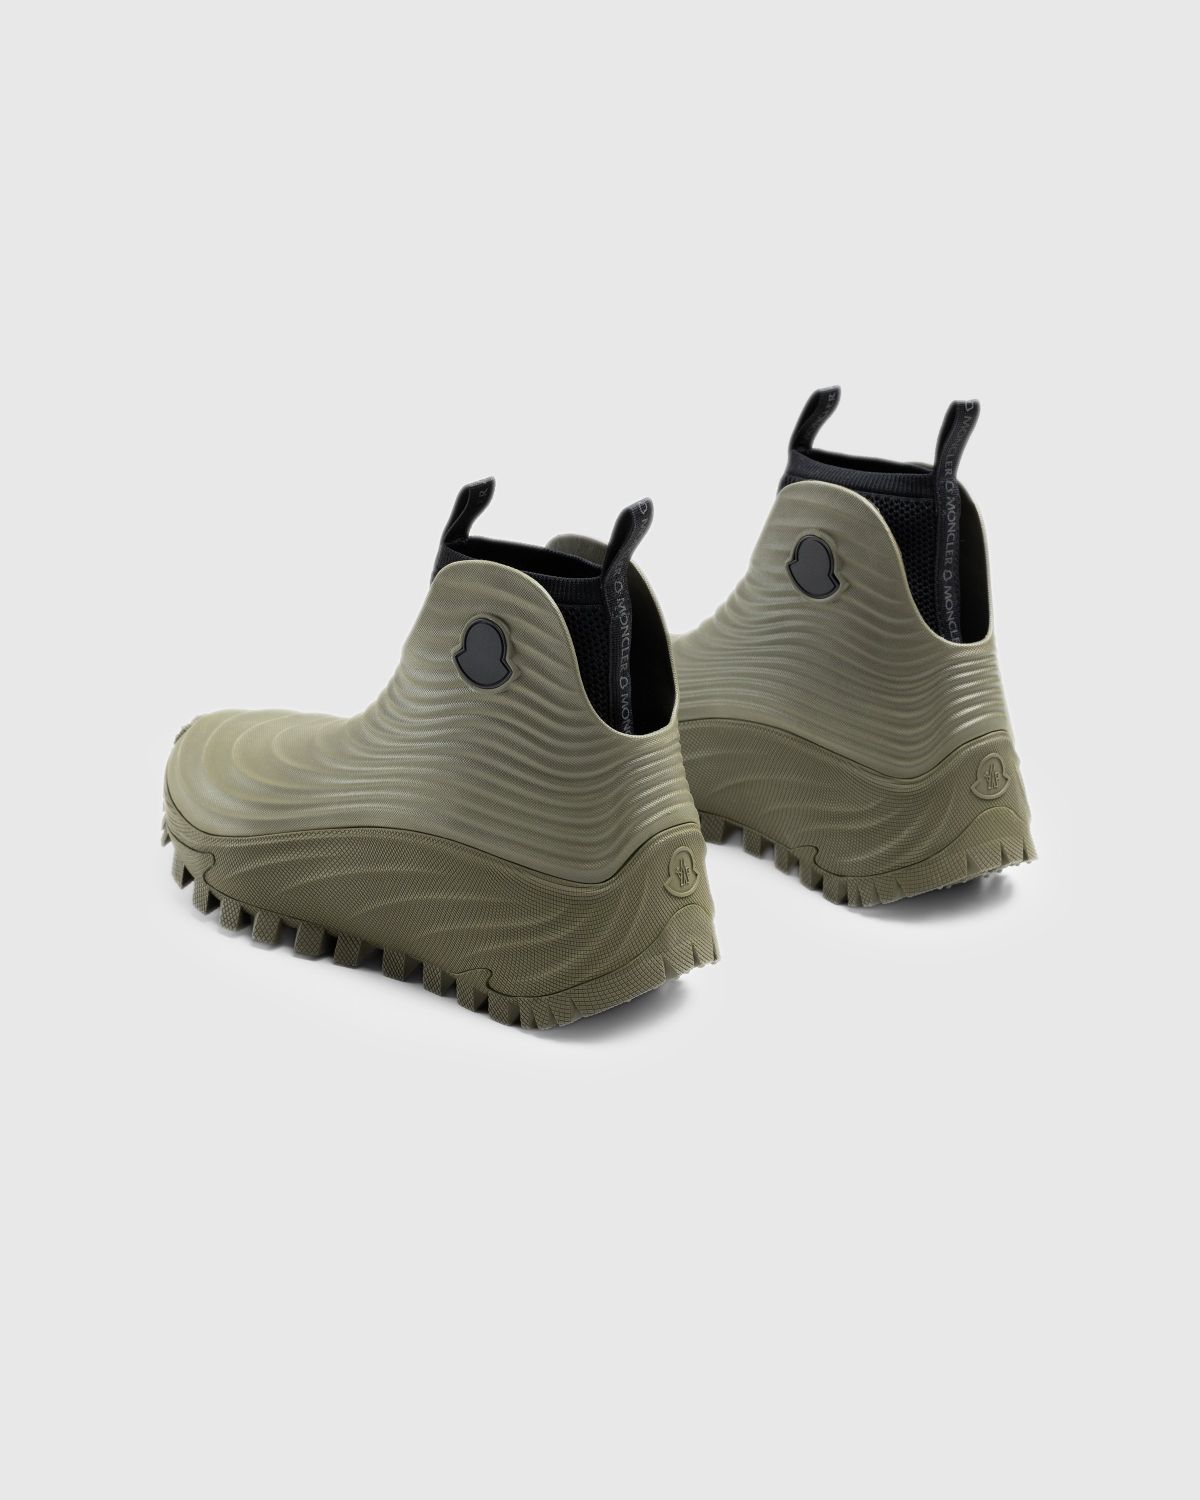 Moncler – Acqua High Rain Boots Khaki - Boots - Brown - Image 4